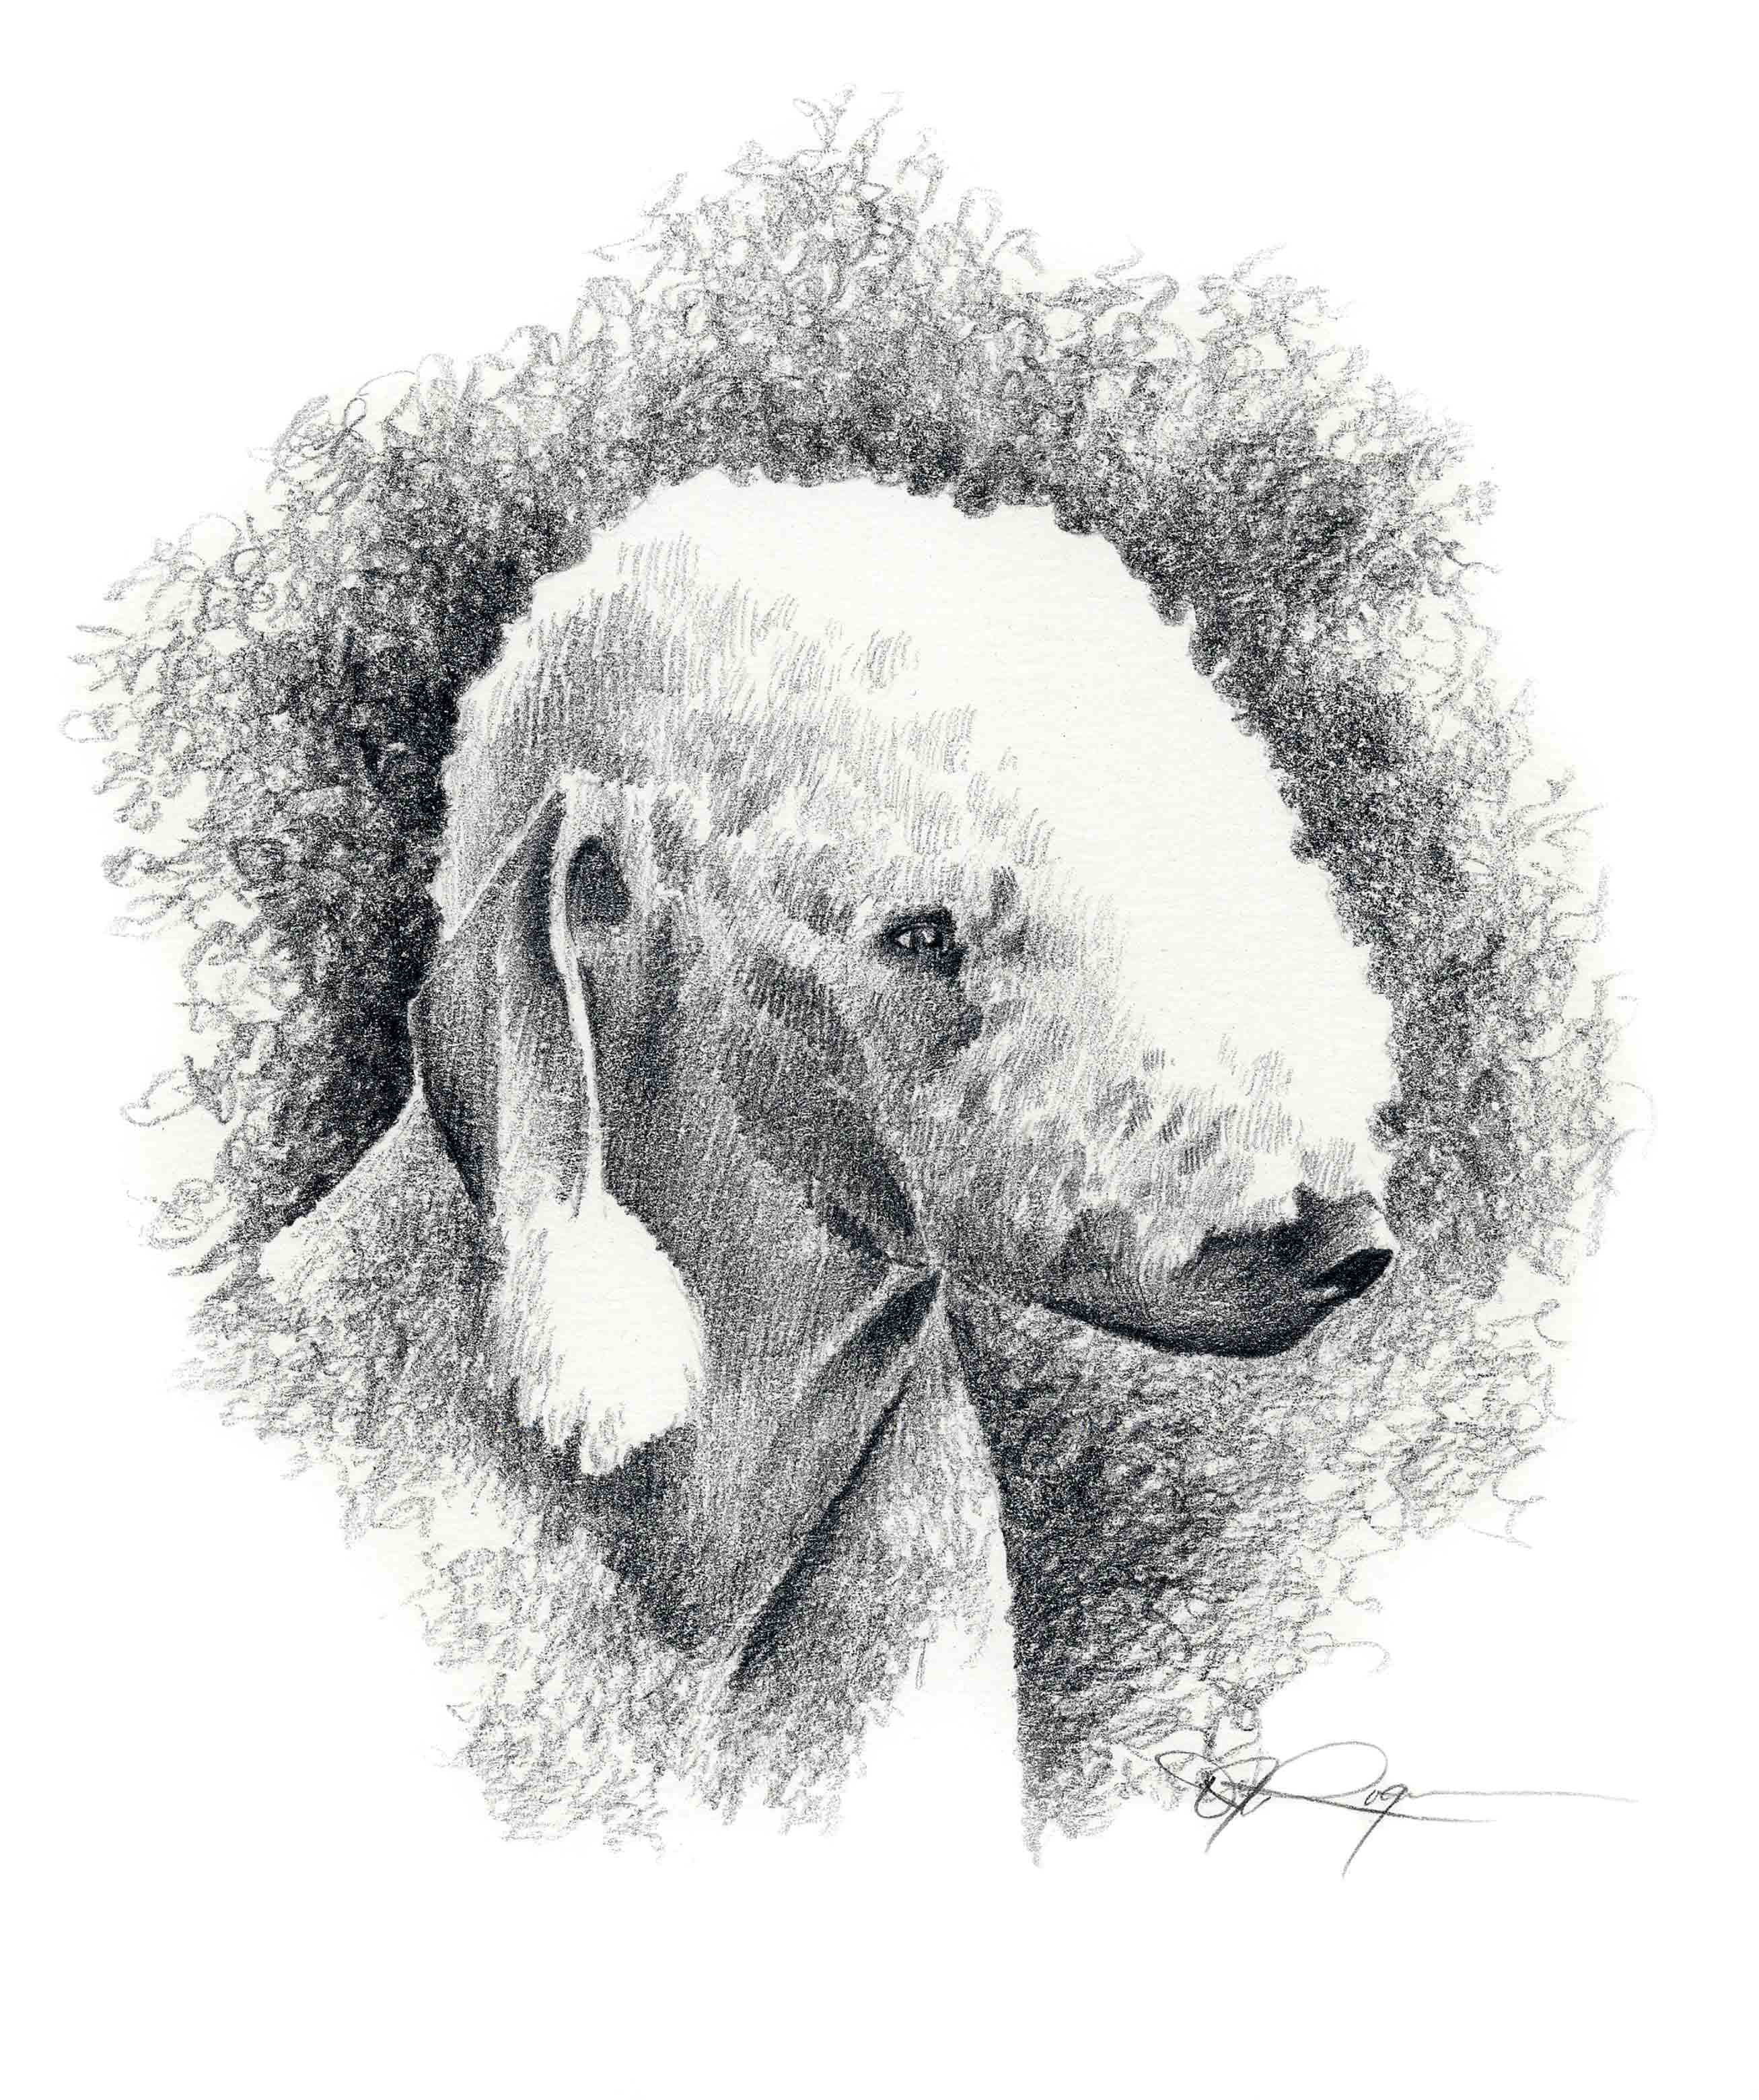 Bedlington Terrier Pencil Dog Art Print by Artist DJ Rogers